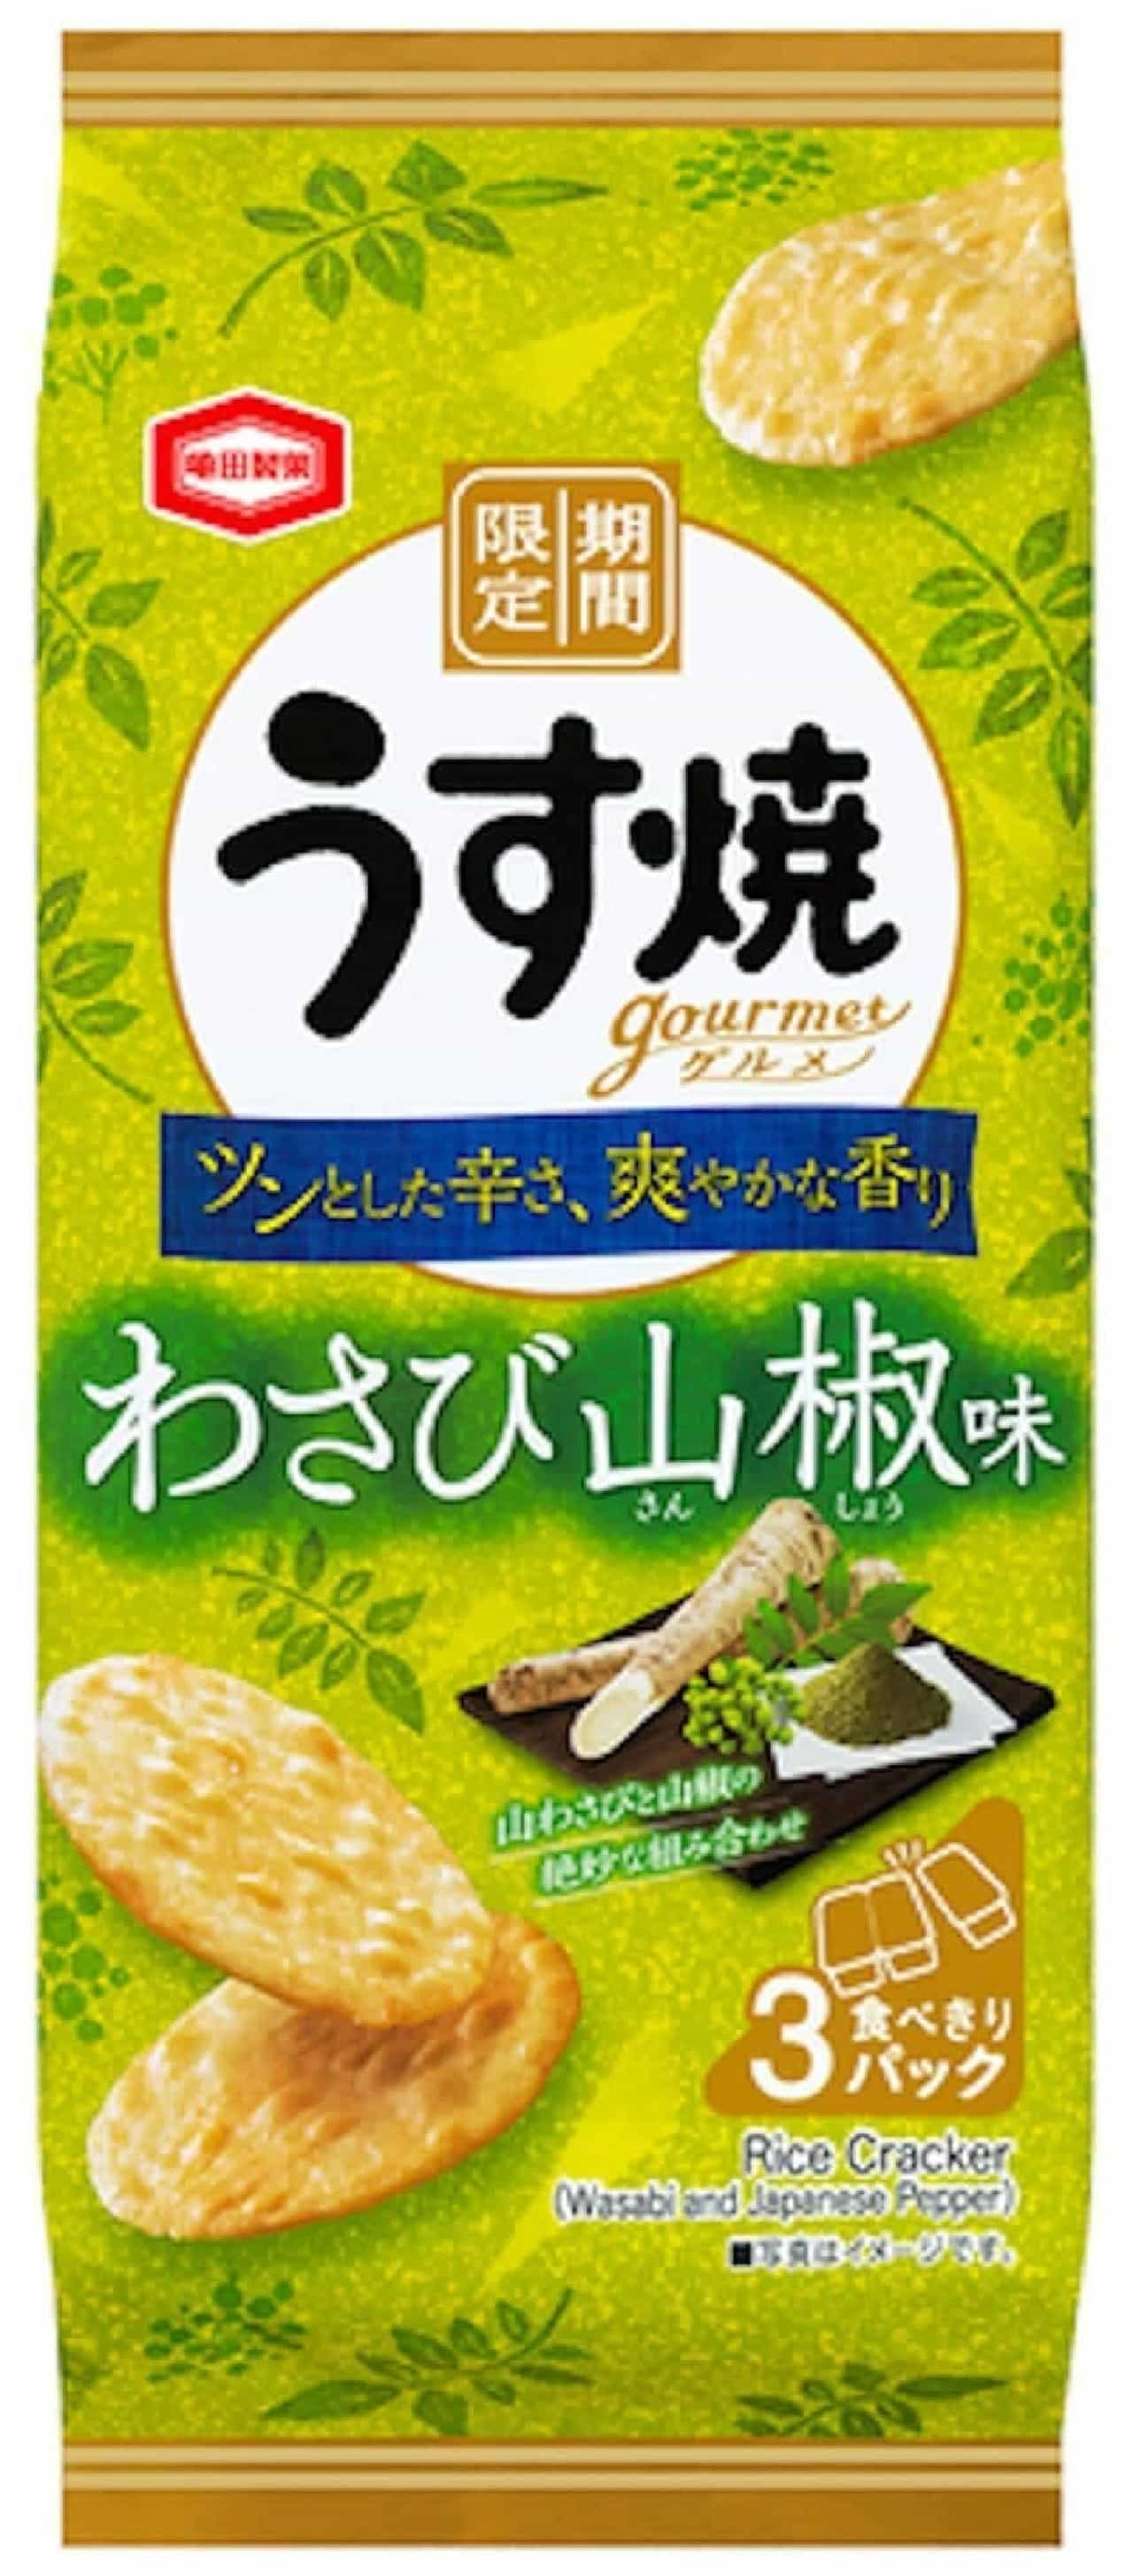 Limited time offer "Usuyaki Gourmet Wasabi Sansho Flavor"